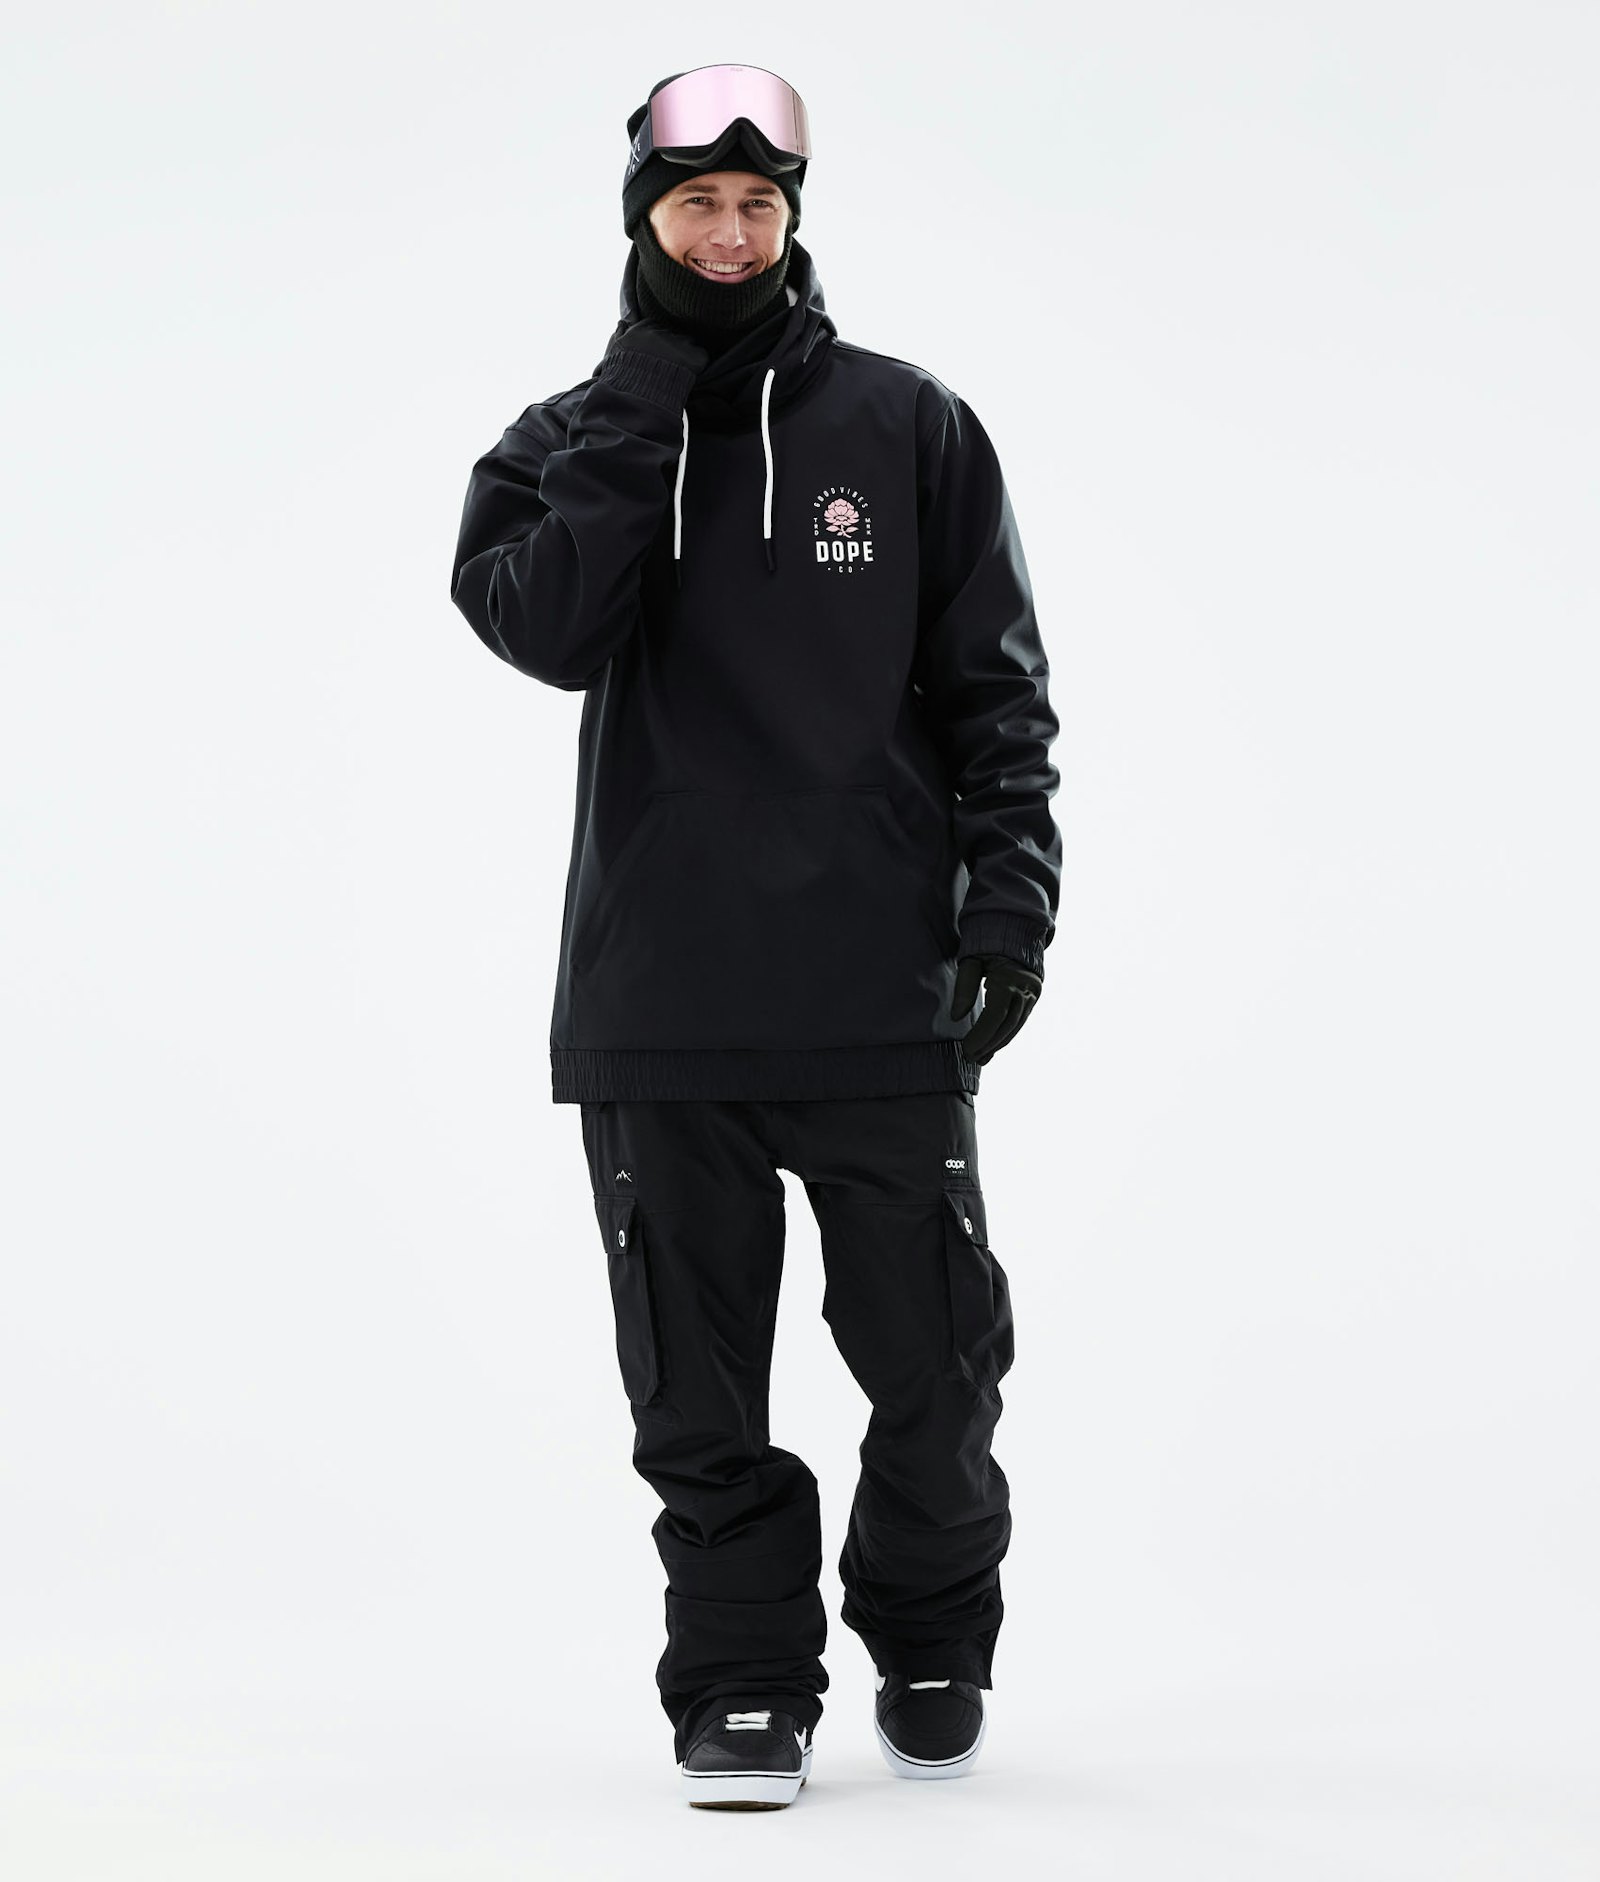 Yeti 2021 Veste Snowboard Homme Rose Black